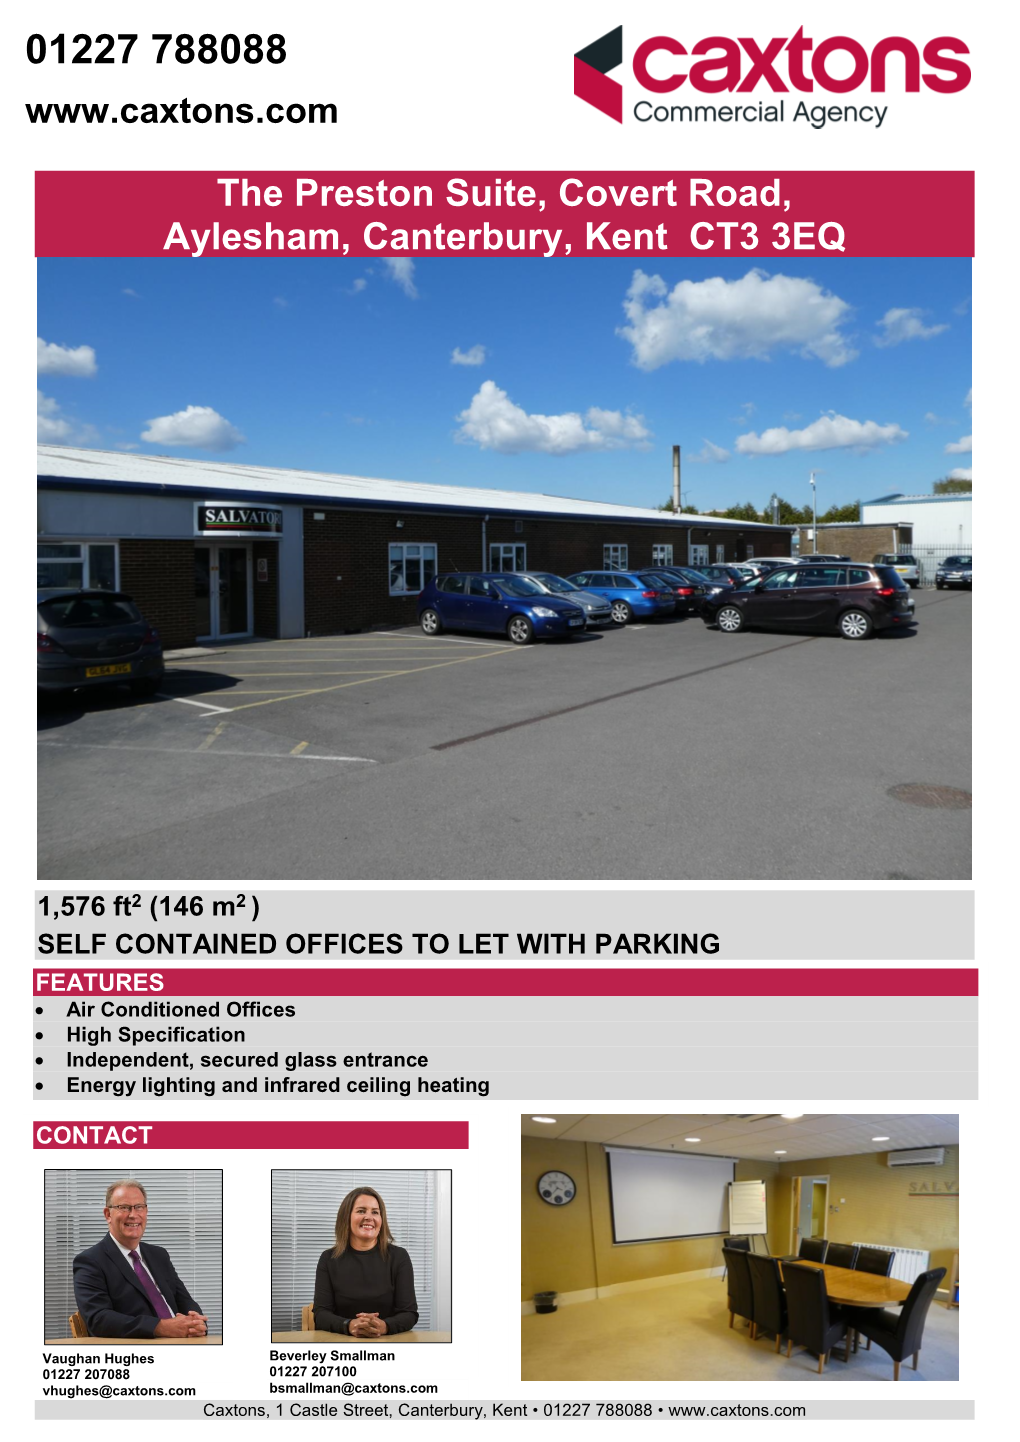 The Preston Suite, Covert Road, Aylesham, Canterbury, Kent CT3 3EQ